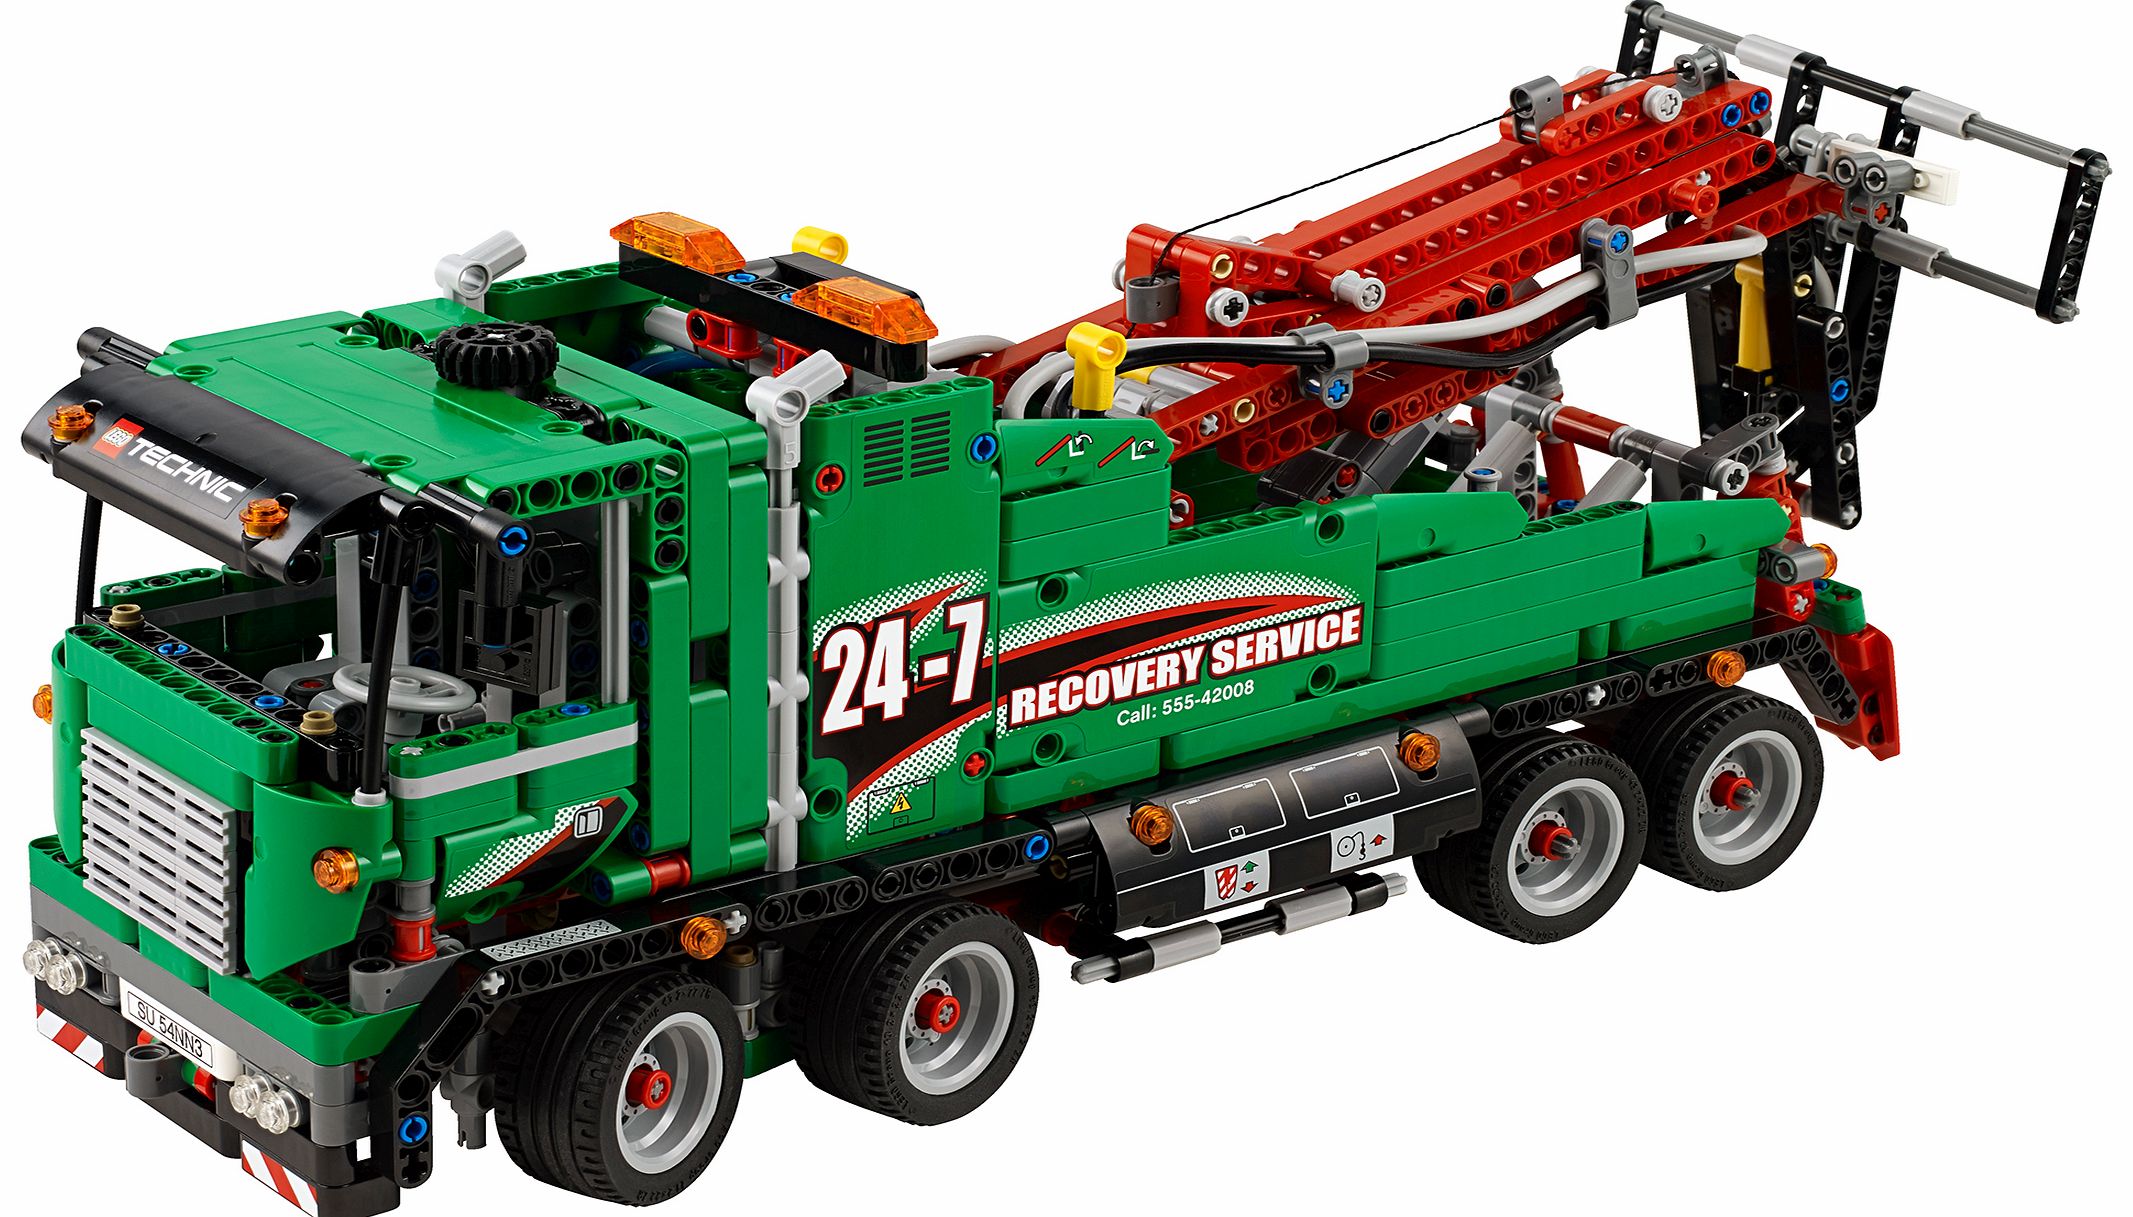 Lego Technic Service Truck 42008